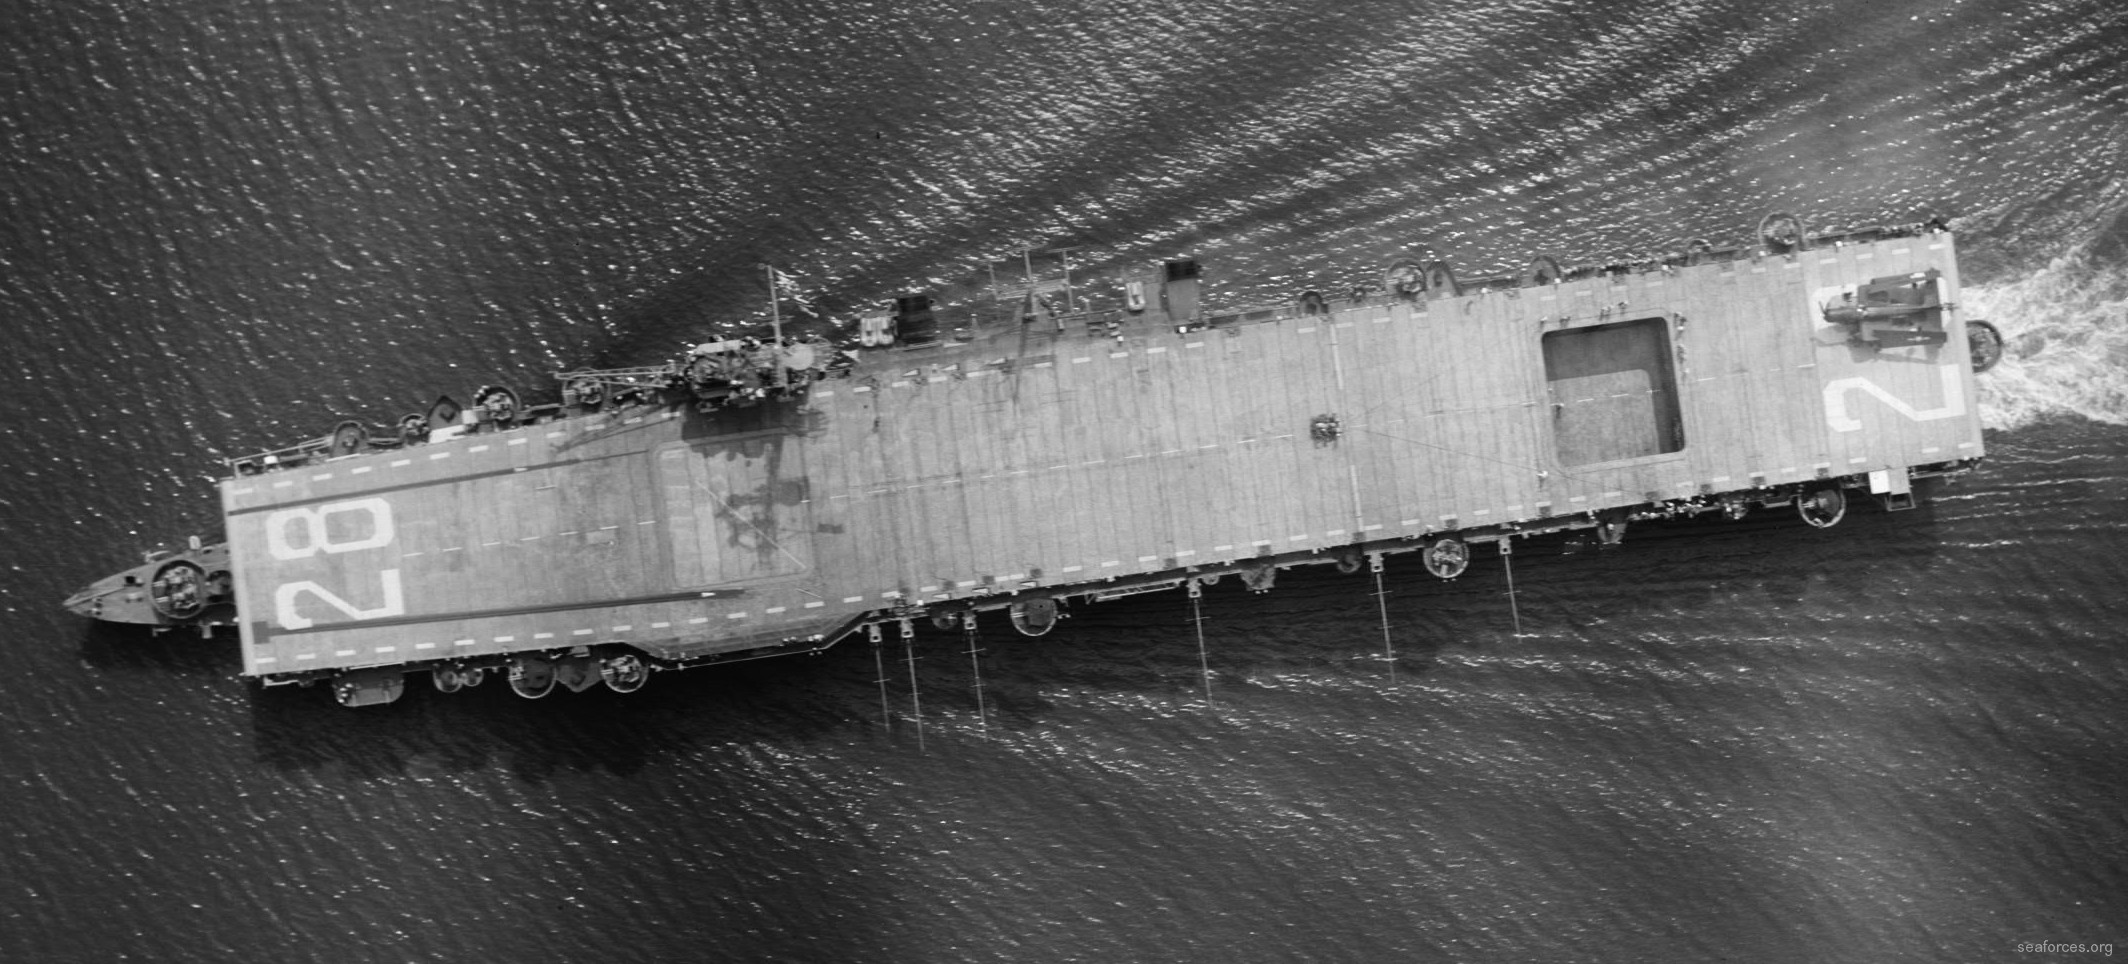 uss cabot cvl-28 aircraft carrier r-01 sps dedalo spanish navy 06